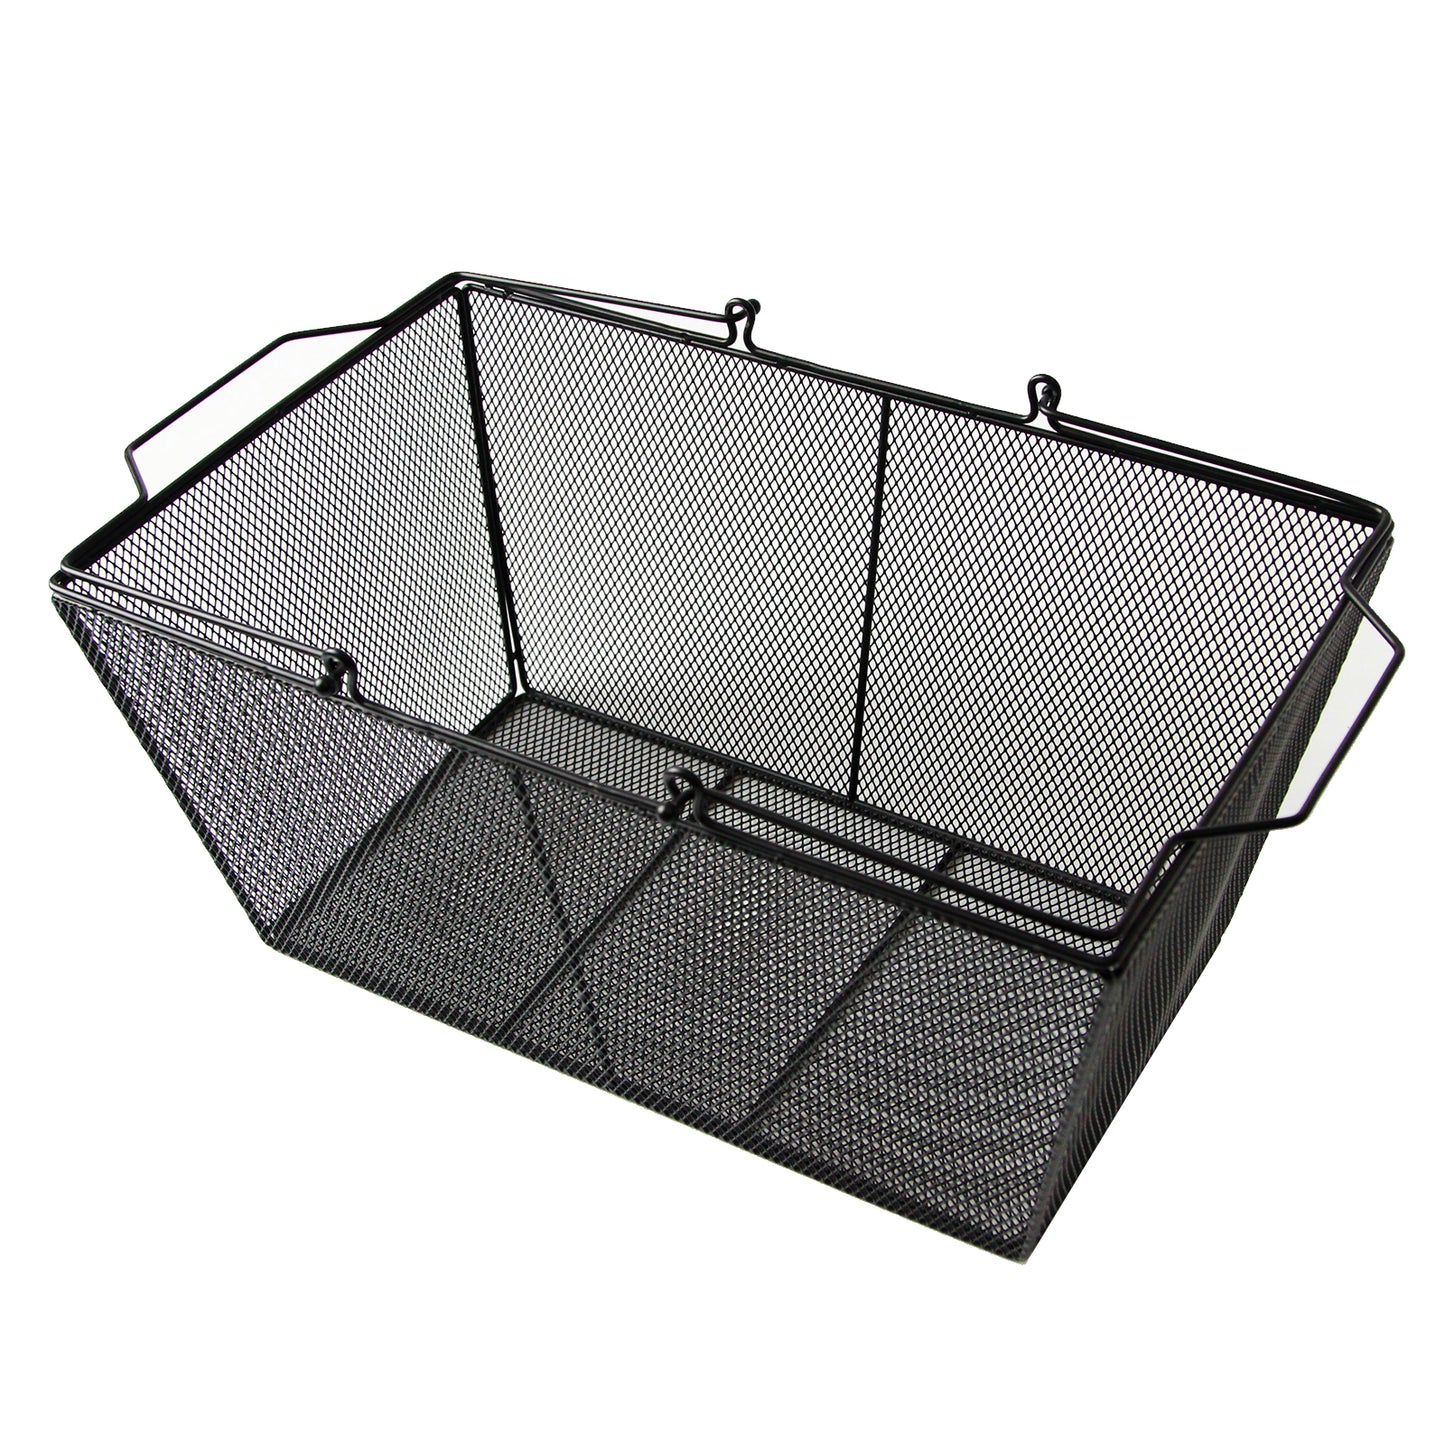 2 handle black mesh basket